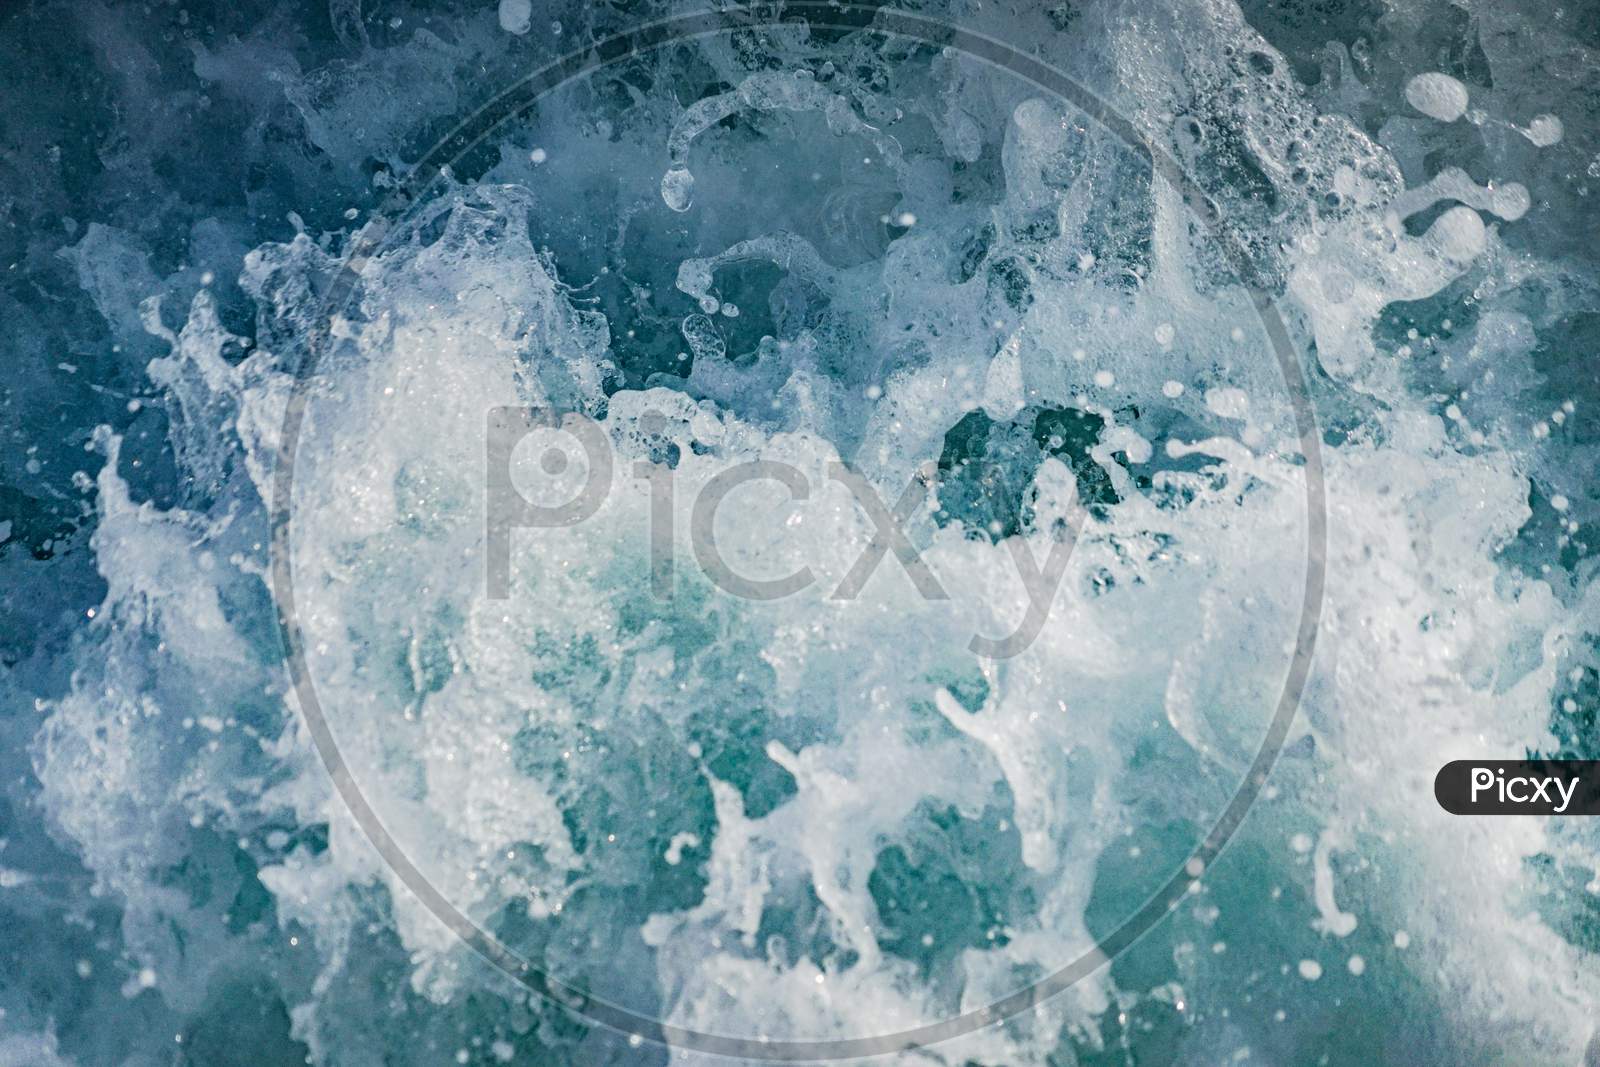 Intense Splash Image (Wallpaper Material)